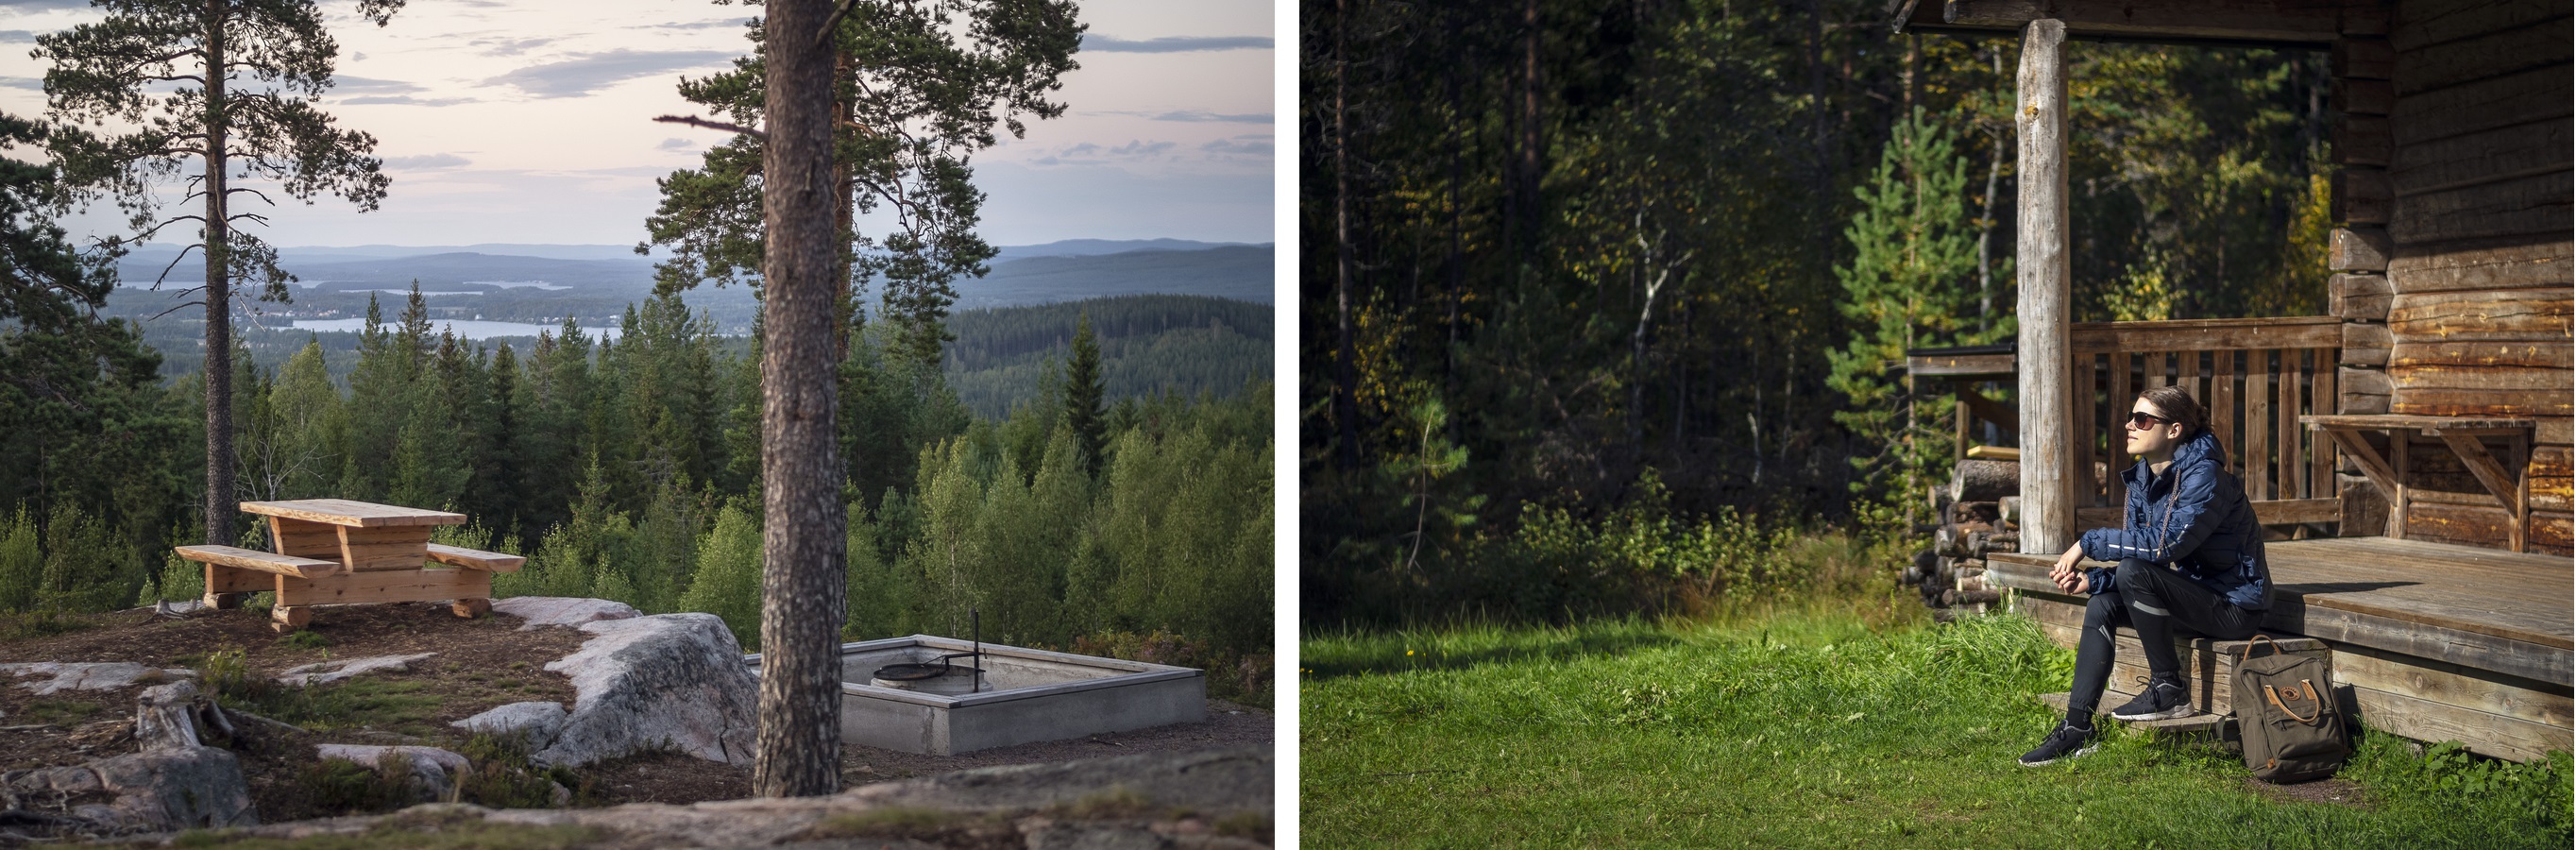 Fotocollage ved ulike utsiktspunkter i Dalarna.